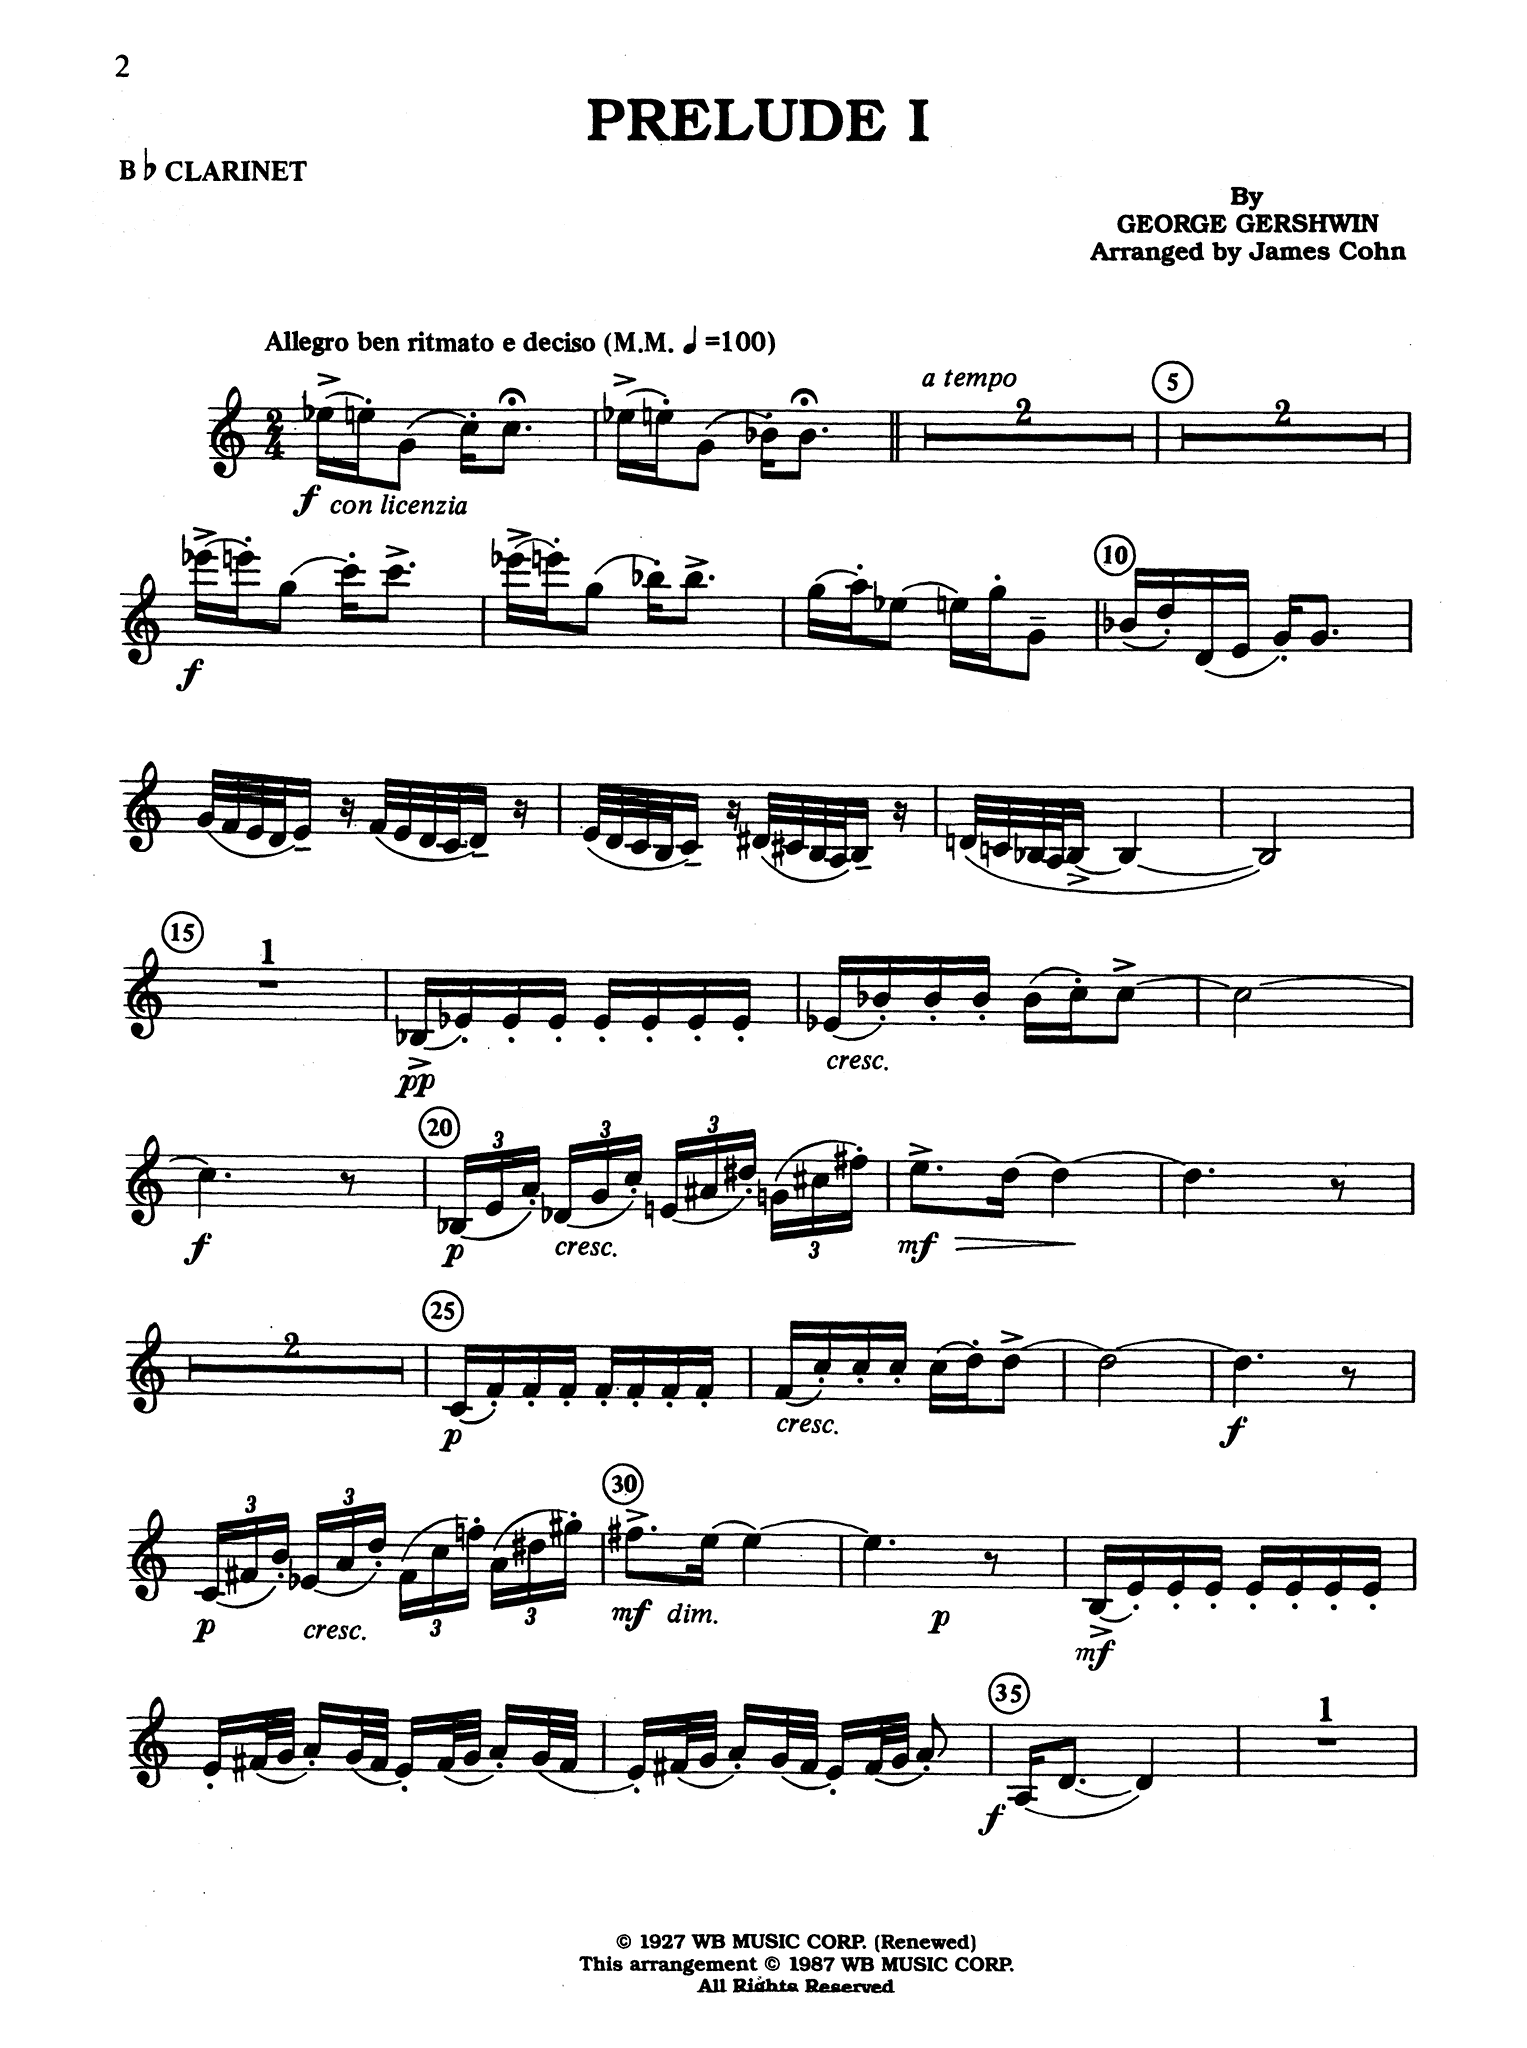 Gershwin 3 Preludes, arranged by Cohn Clarinet part